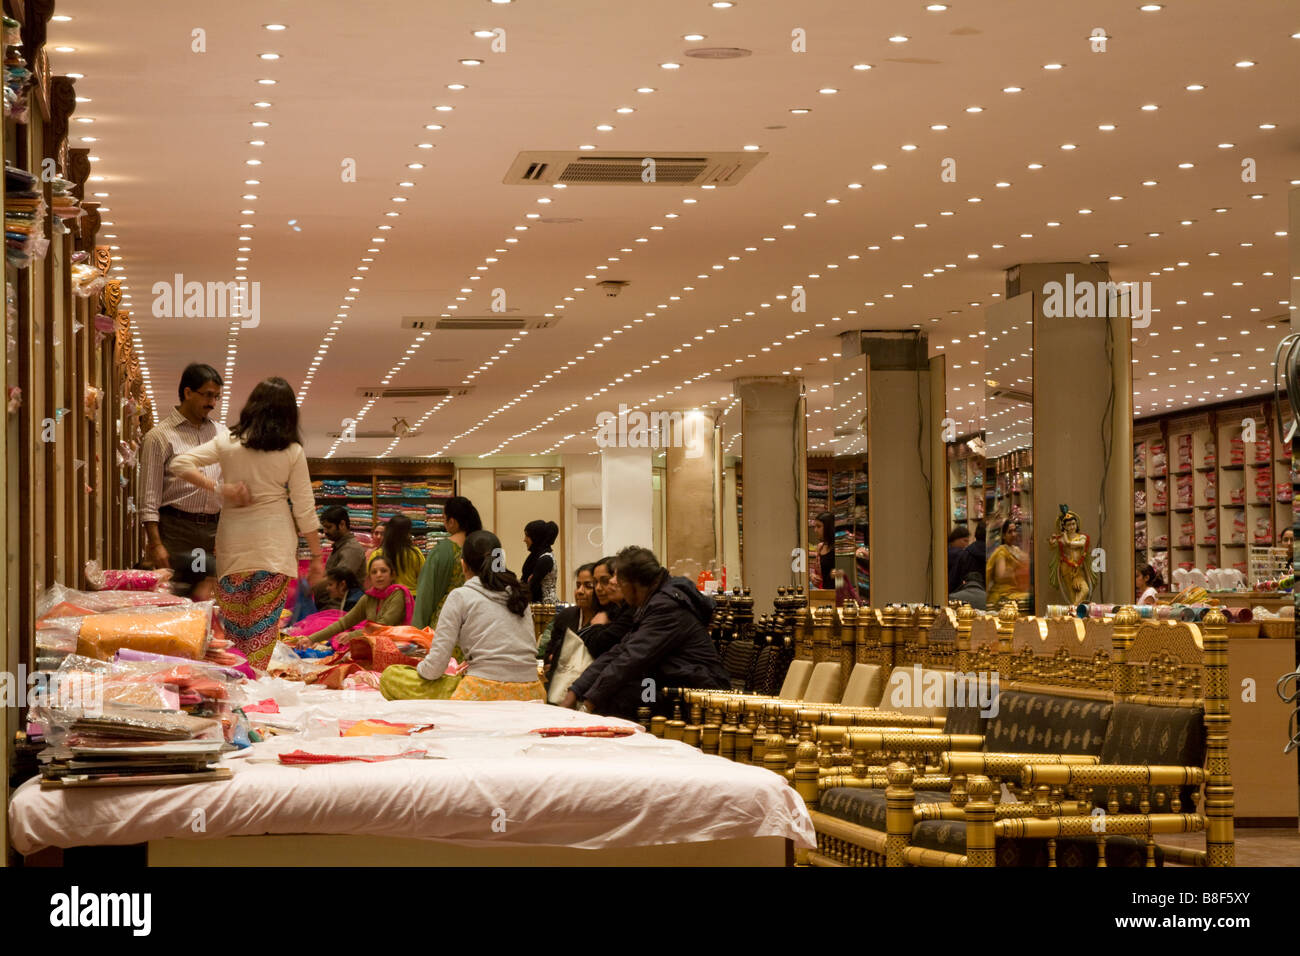 Tienda de ropa Sari indio - Wembley - Londres Foto de stock